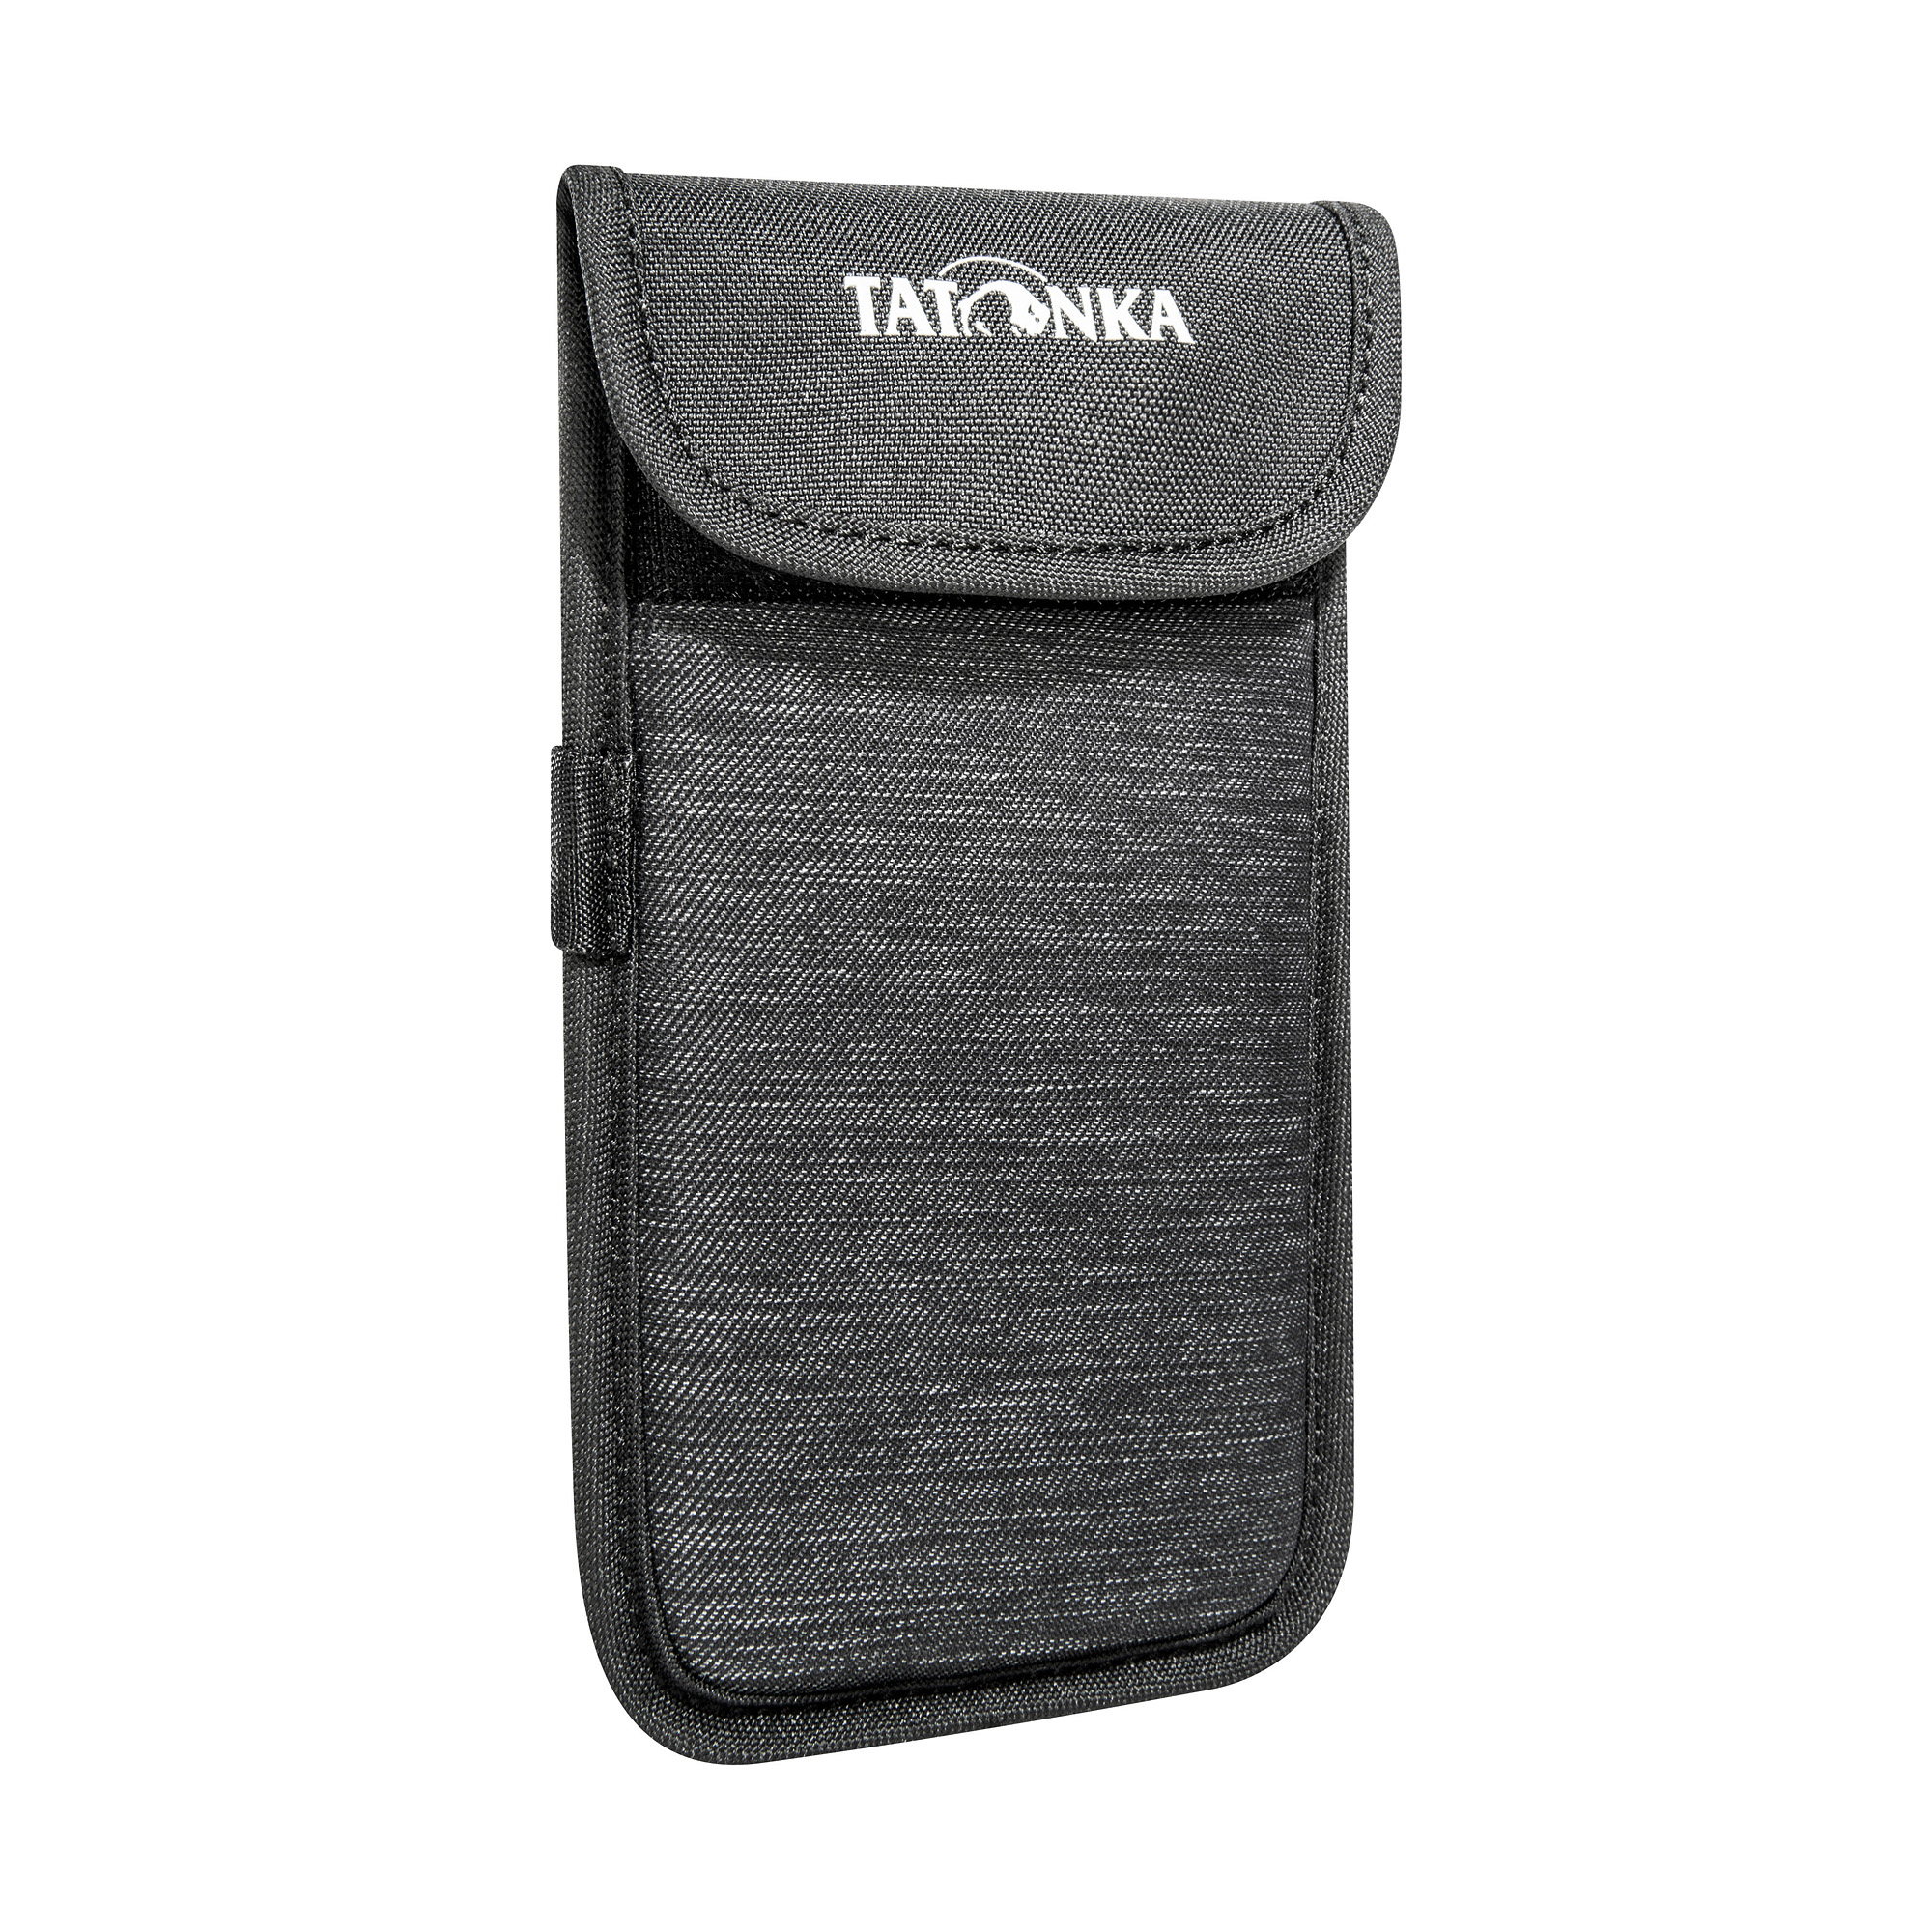 Tatonka Smartphone Case L off black schwarz Handyhüllen 4013236336054